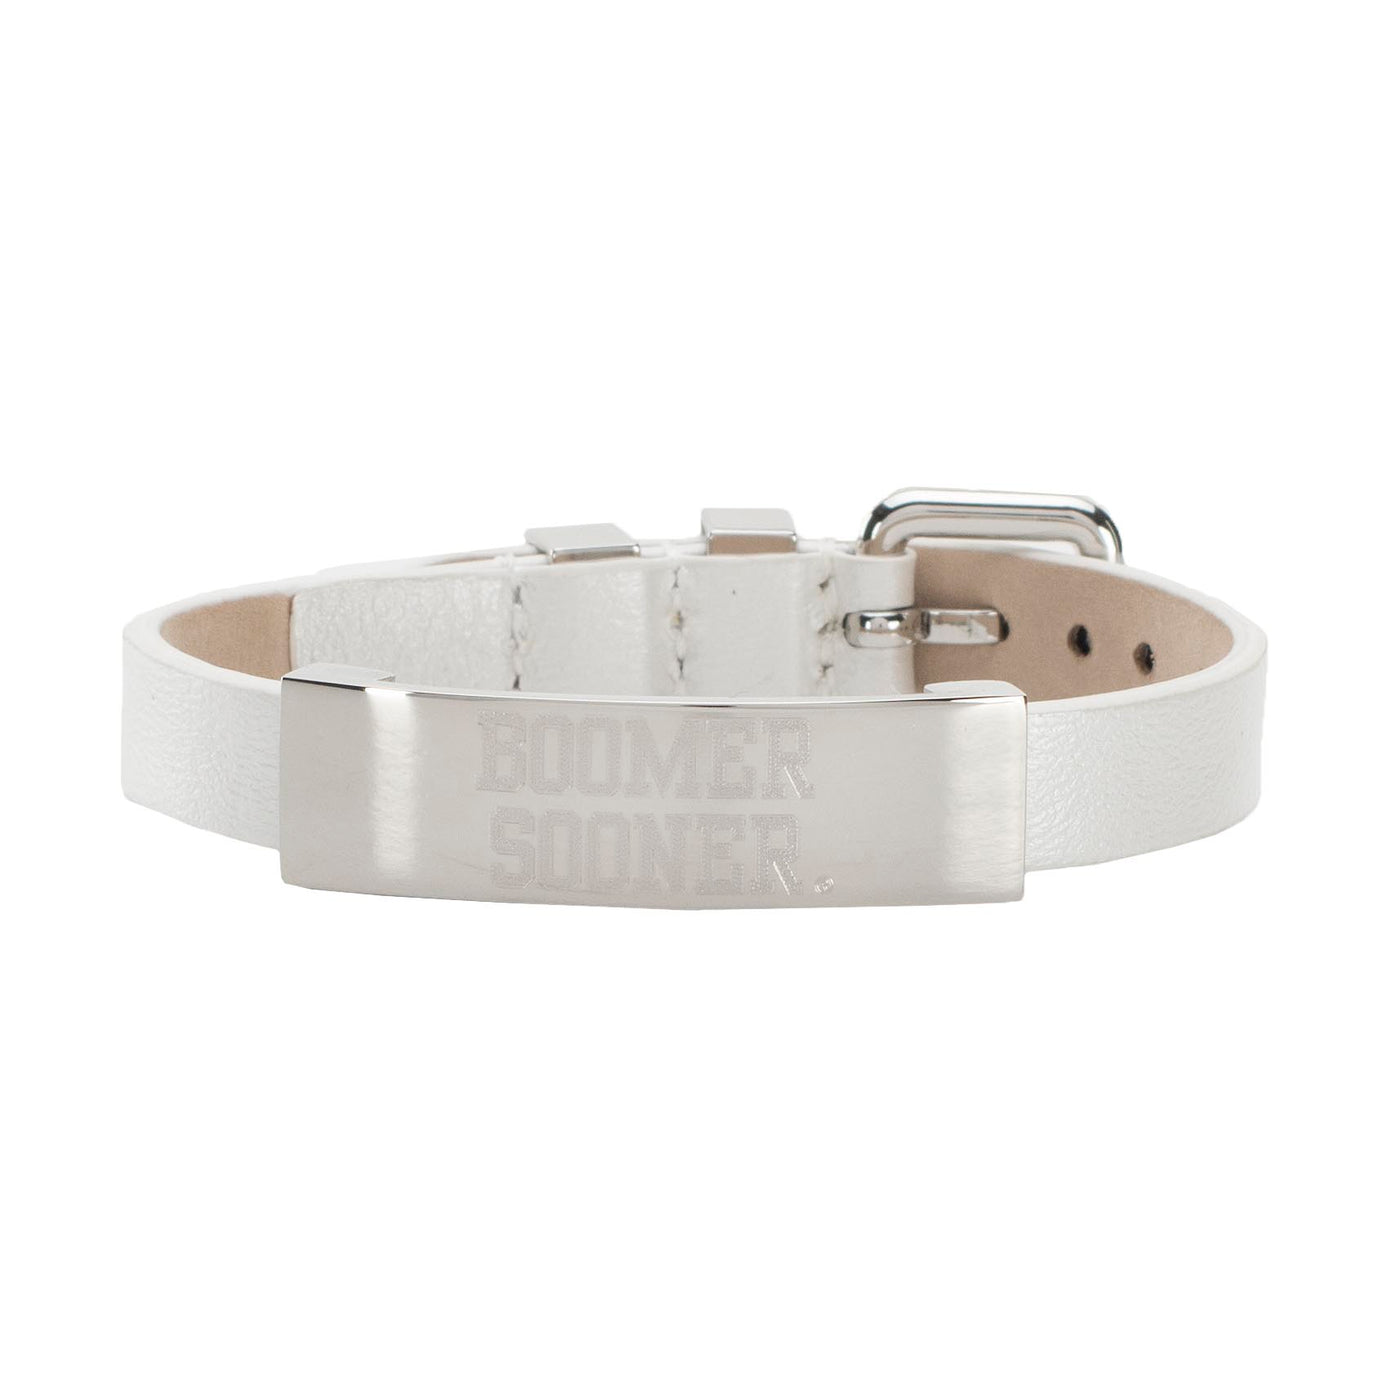 NCAA Betsy Leather Bracelet - University of Oklahoma "BOOMER SOONER" White Silver